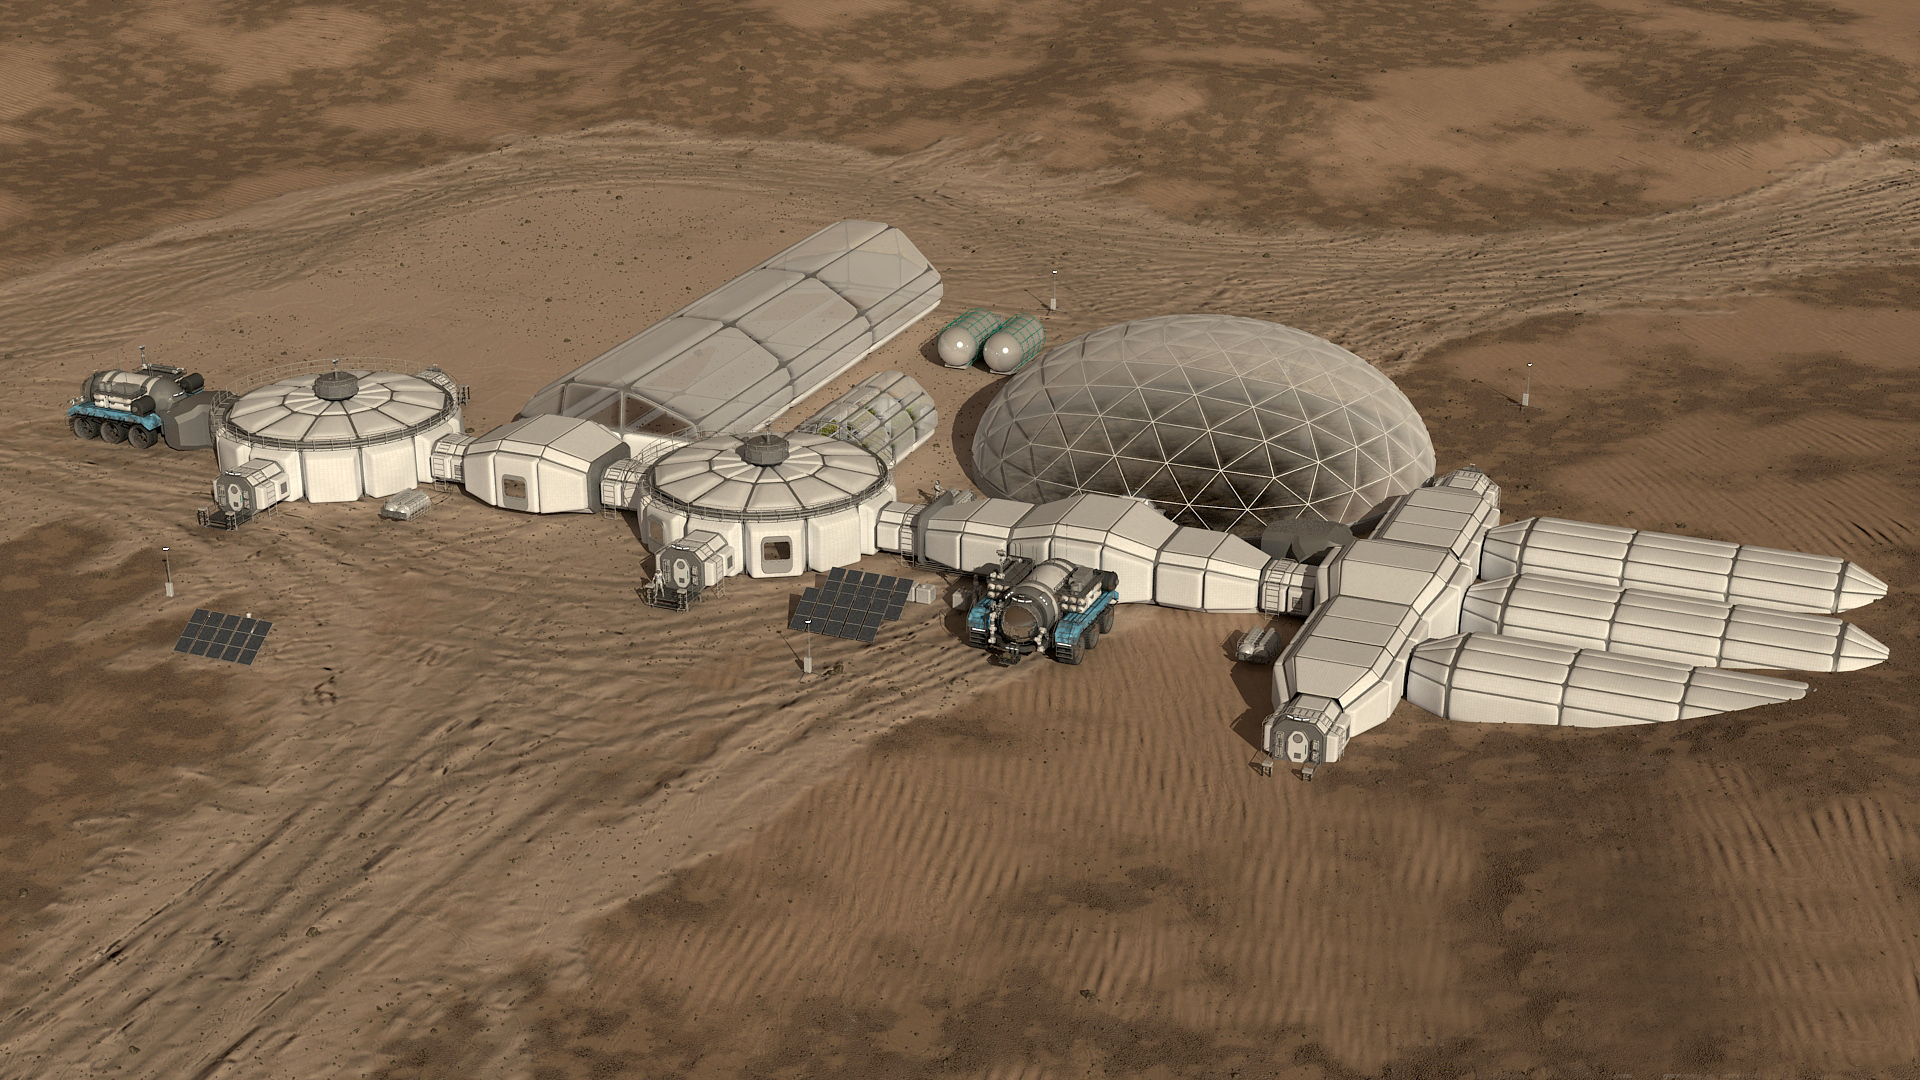 Interactive model simulates keeping house on Mars ASU News